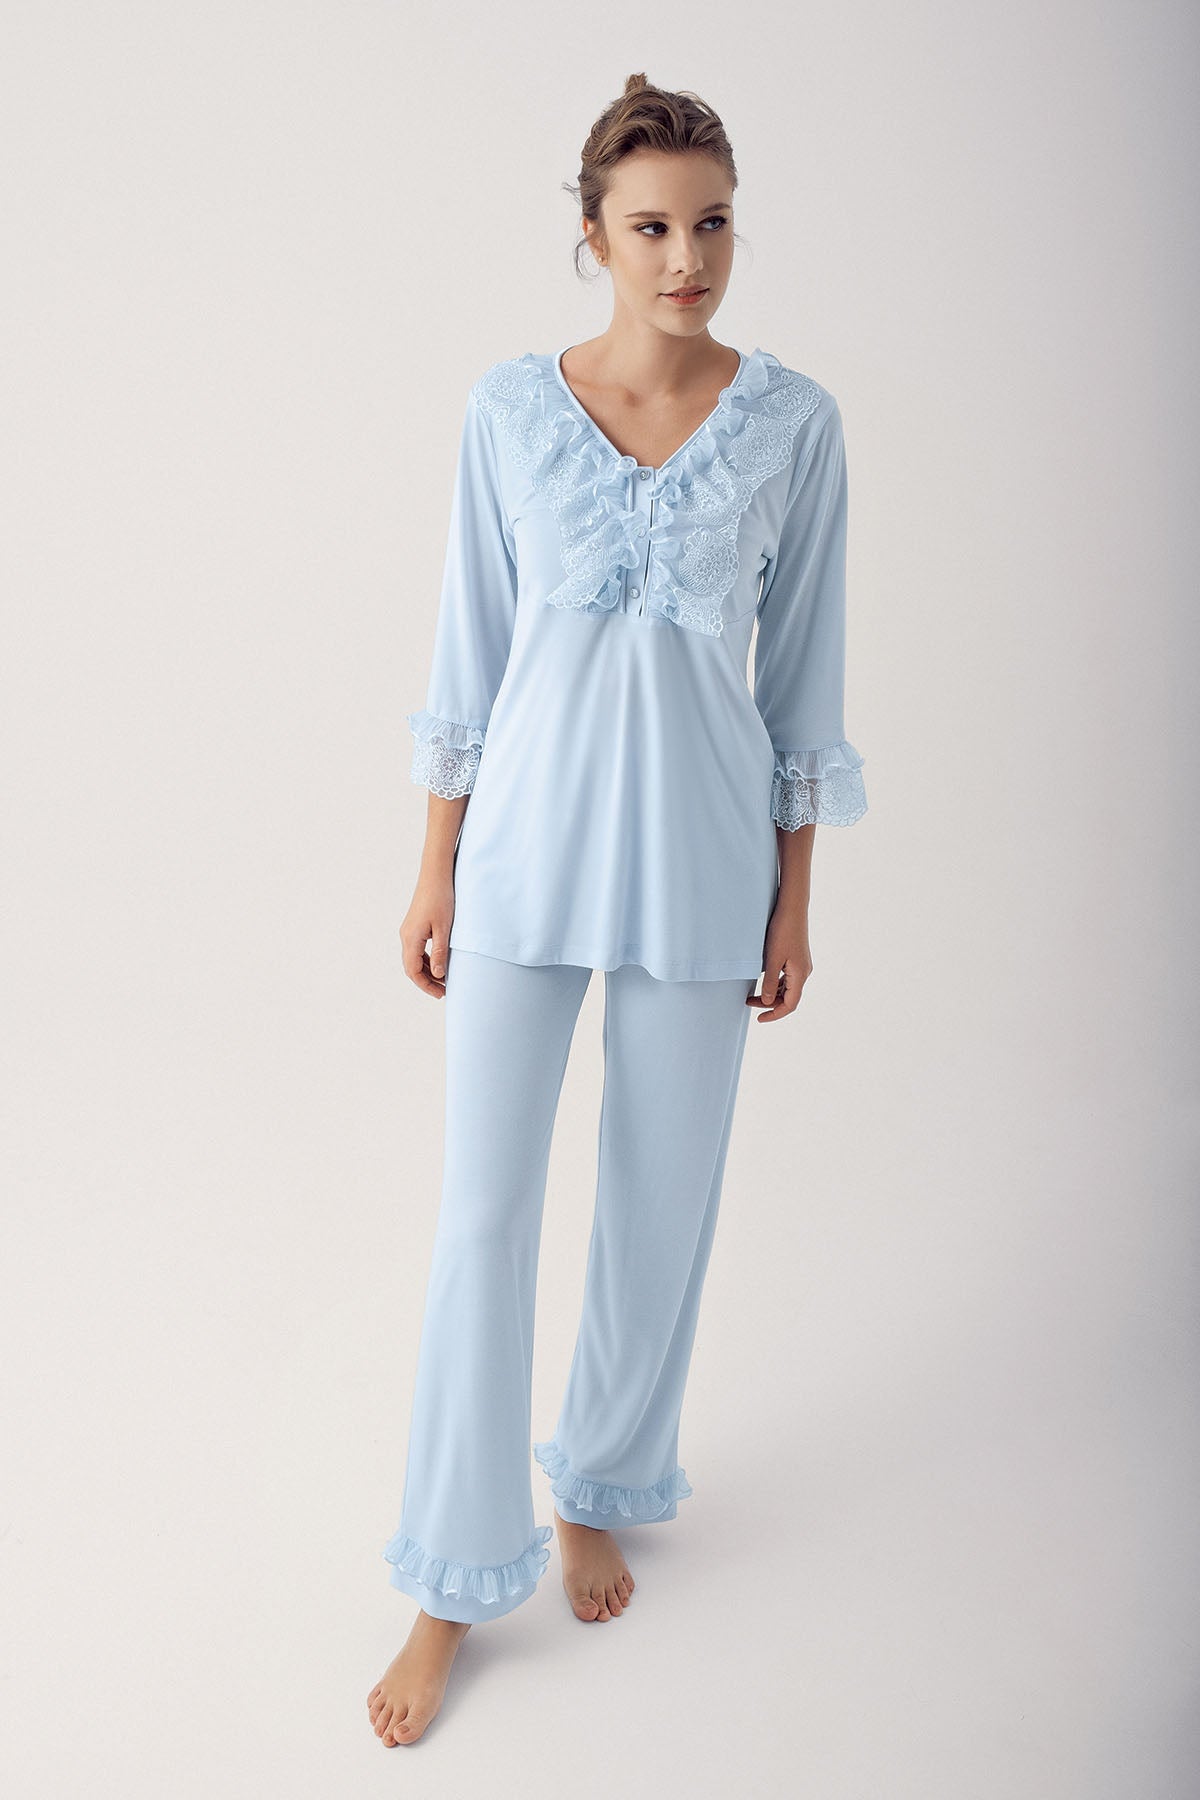 Yaprak Dantel Lohusa Pijama Takımı Mavi - 14203